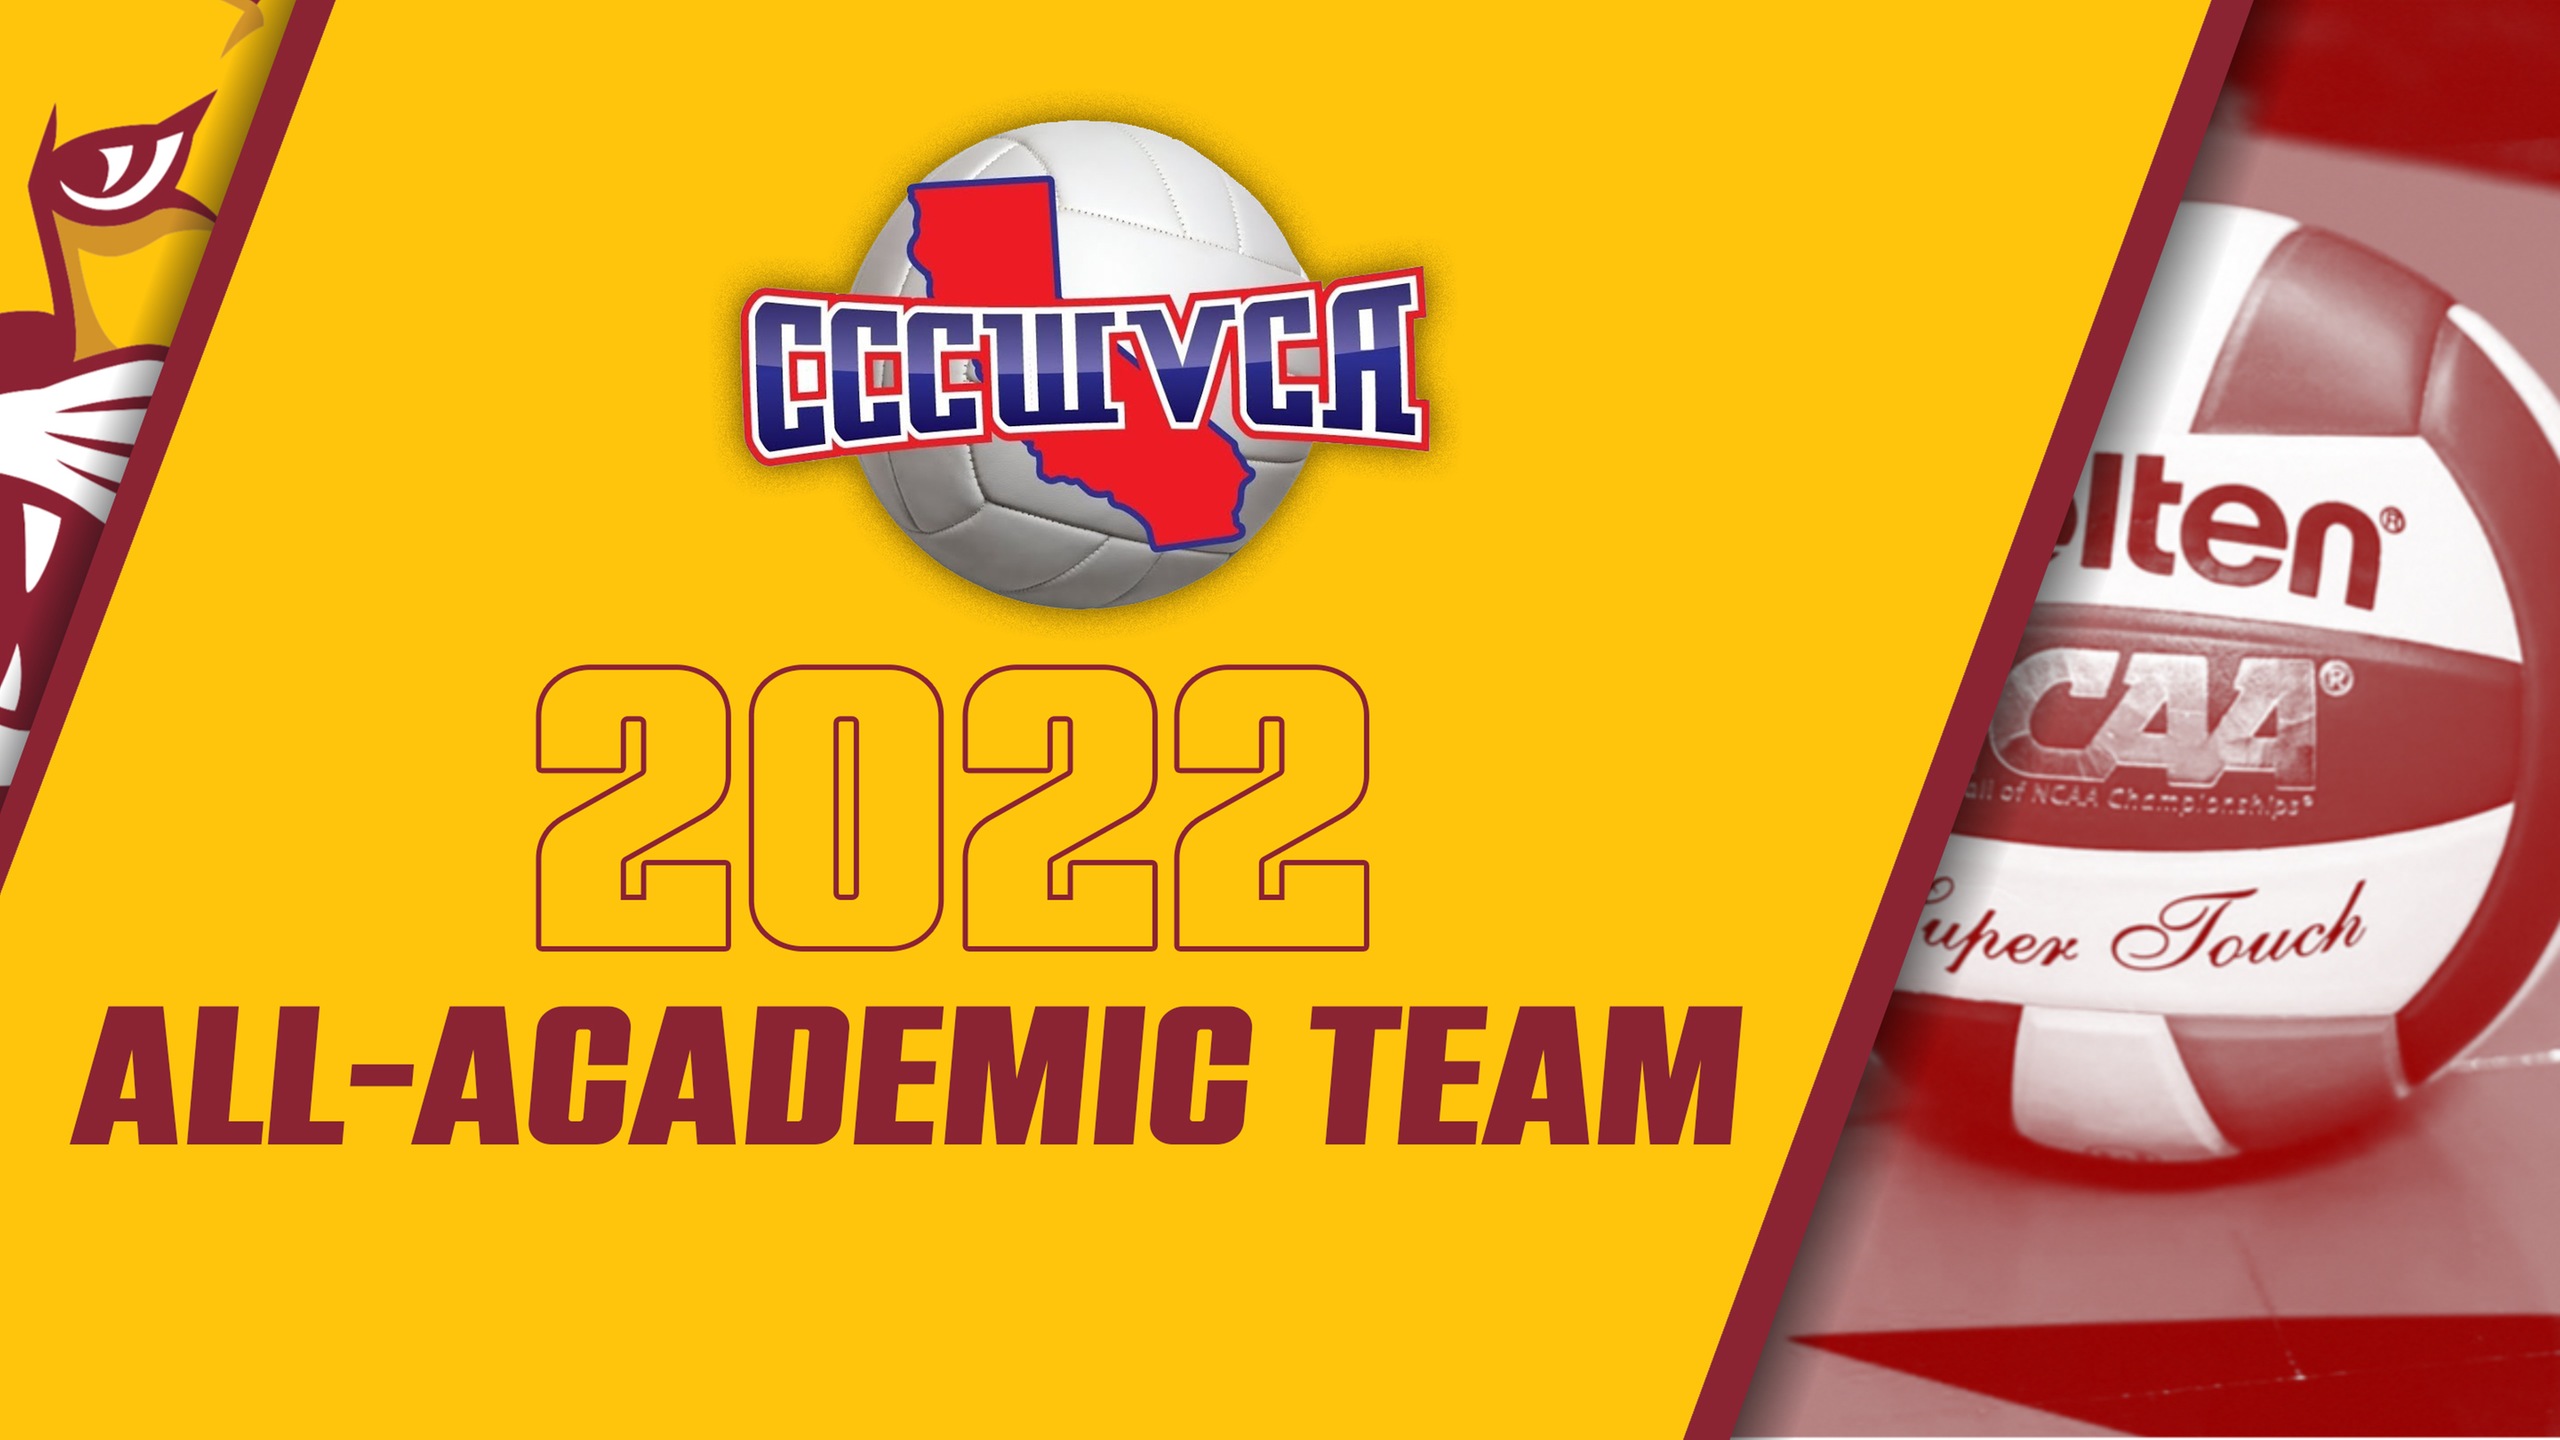 CCCWVCA State All-Academic Team Announced